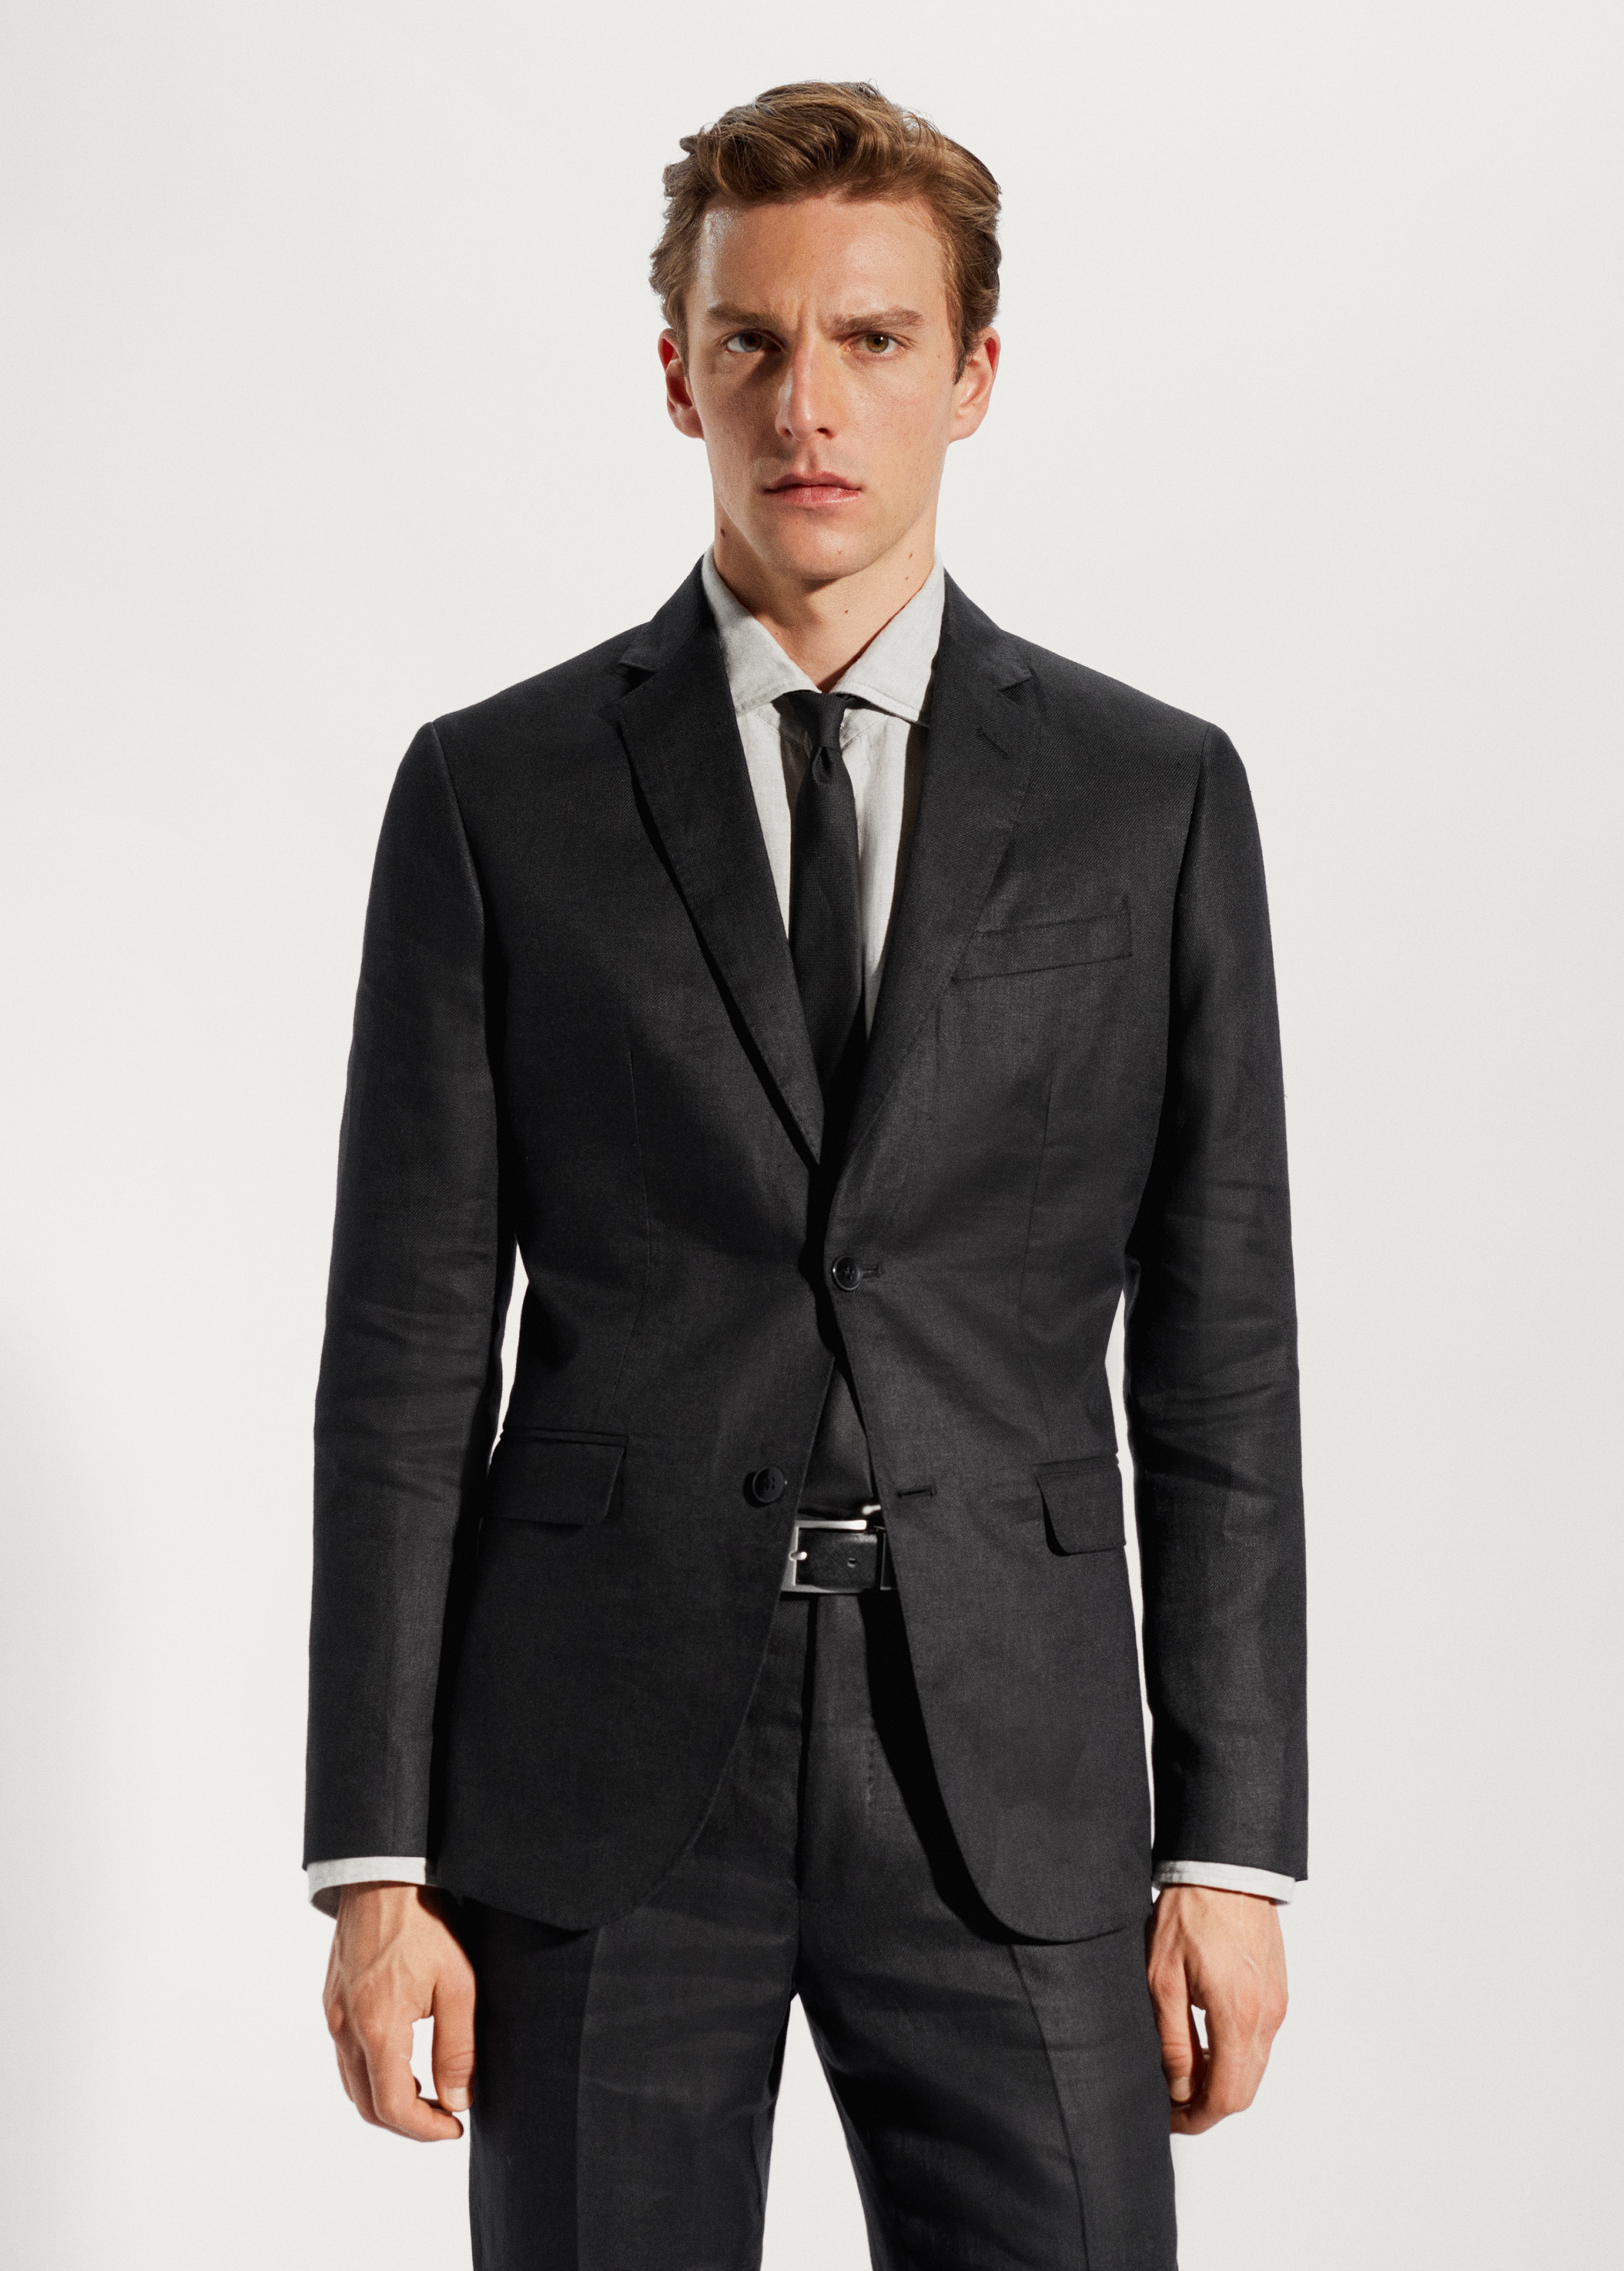 100% linen suit blazer - Medium plane